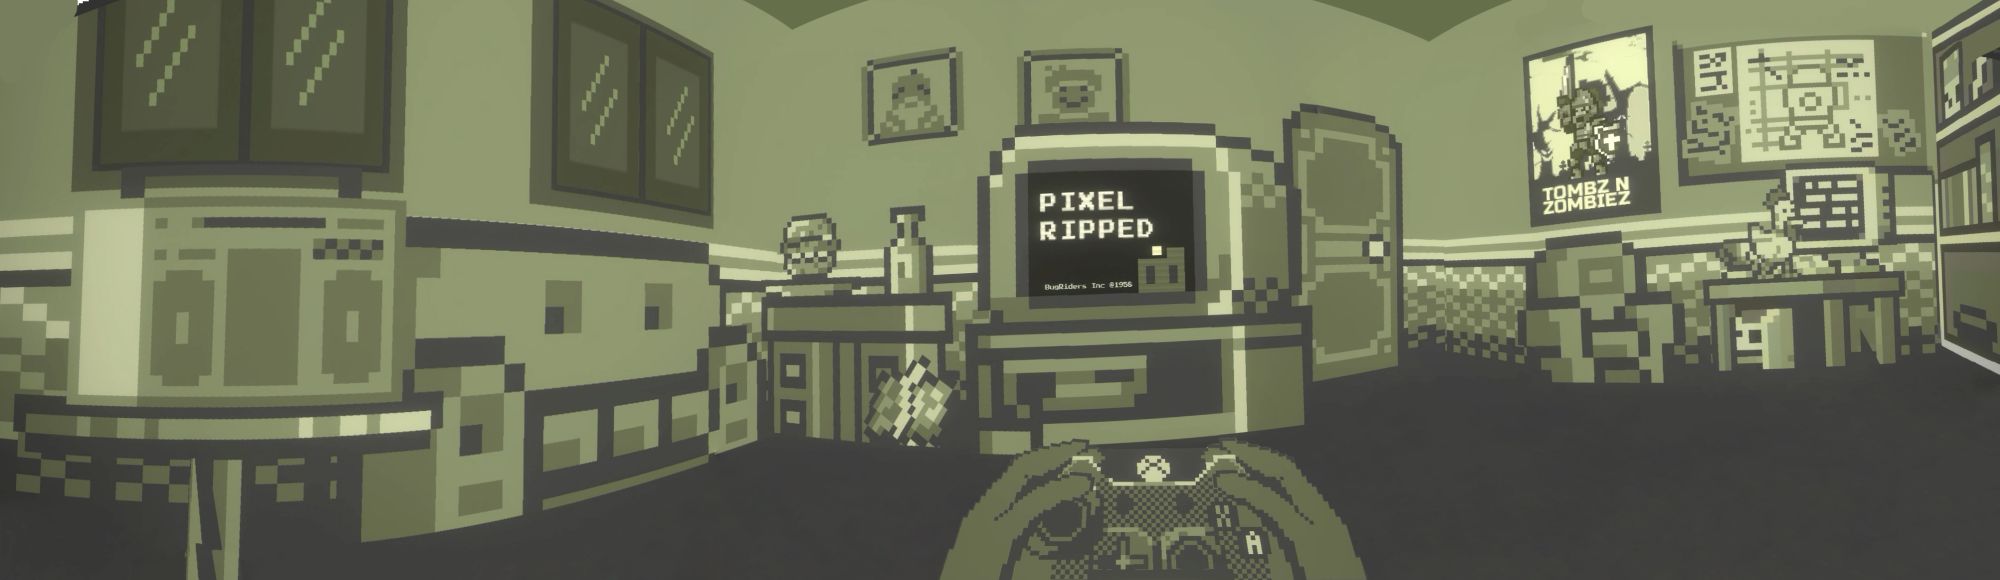 Pixel Ripped 1989 Dot's Raum